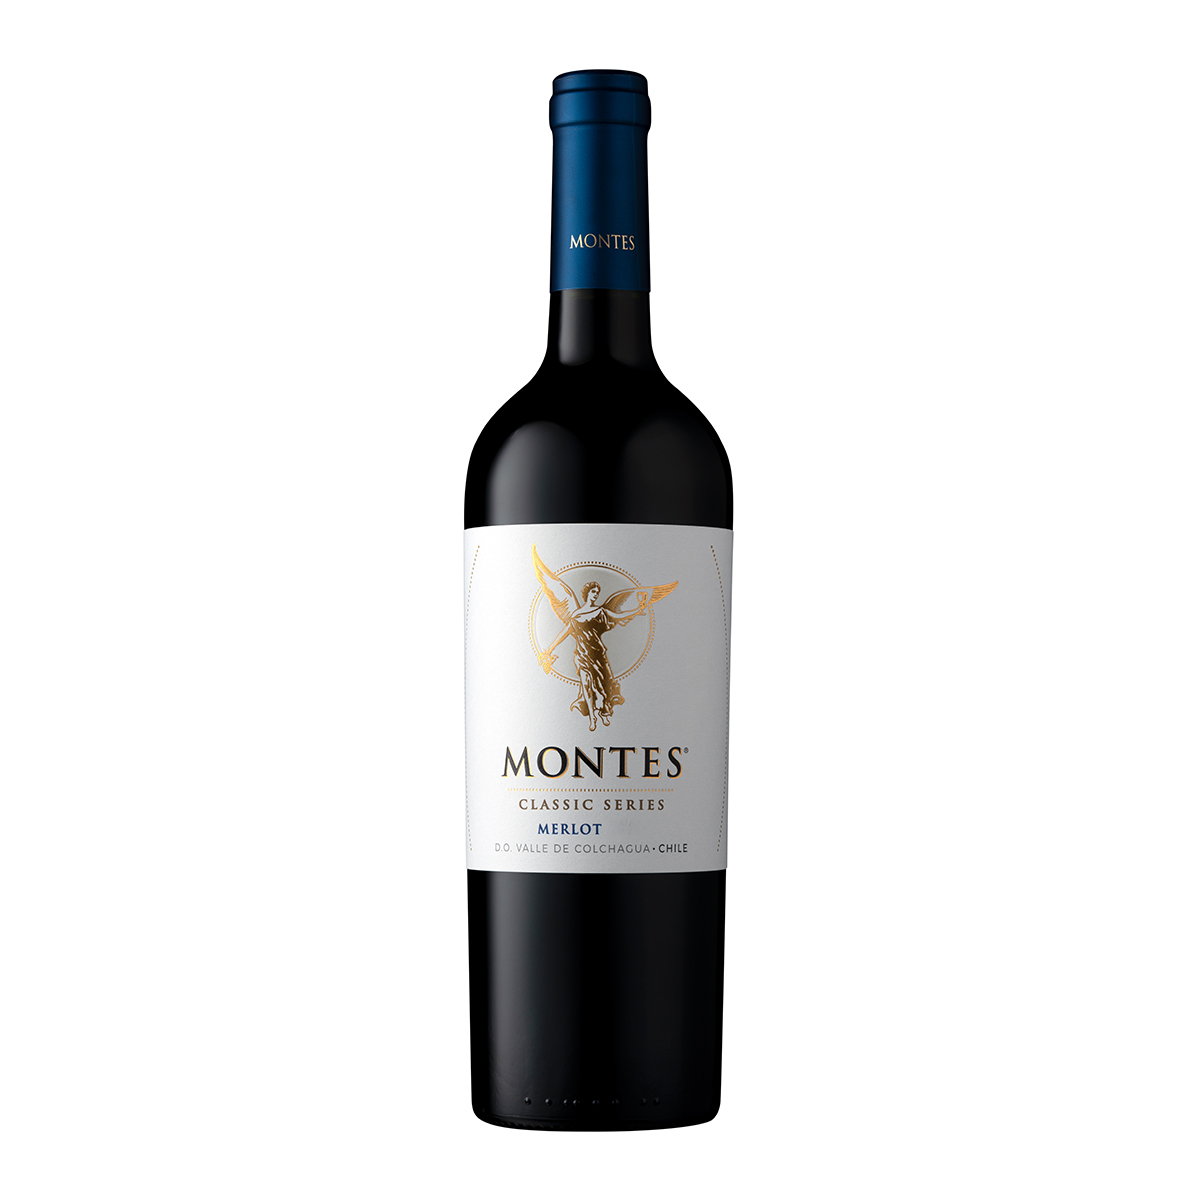 Montes Wines Classic Series Merlot 2018 vins wine